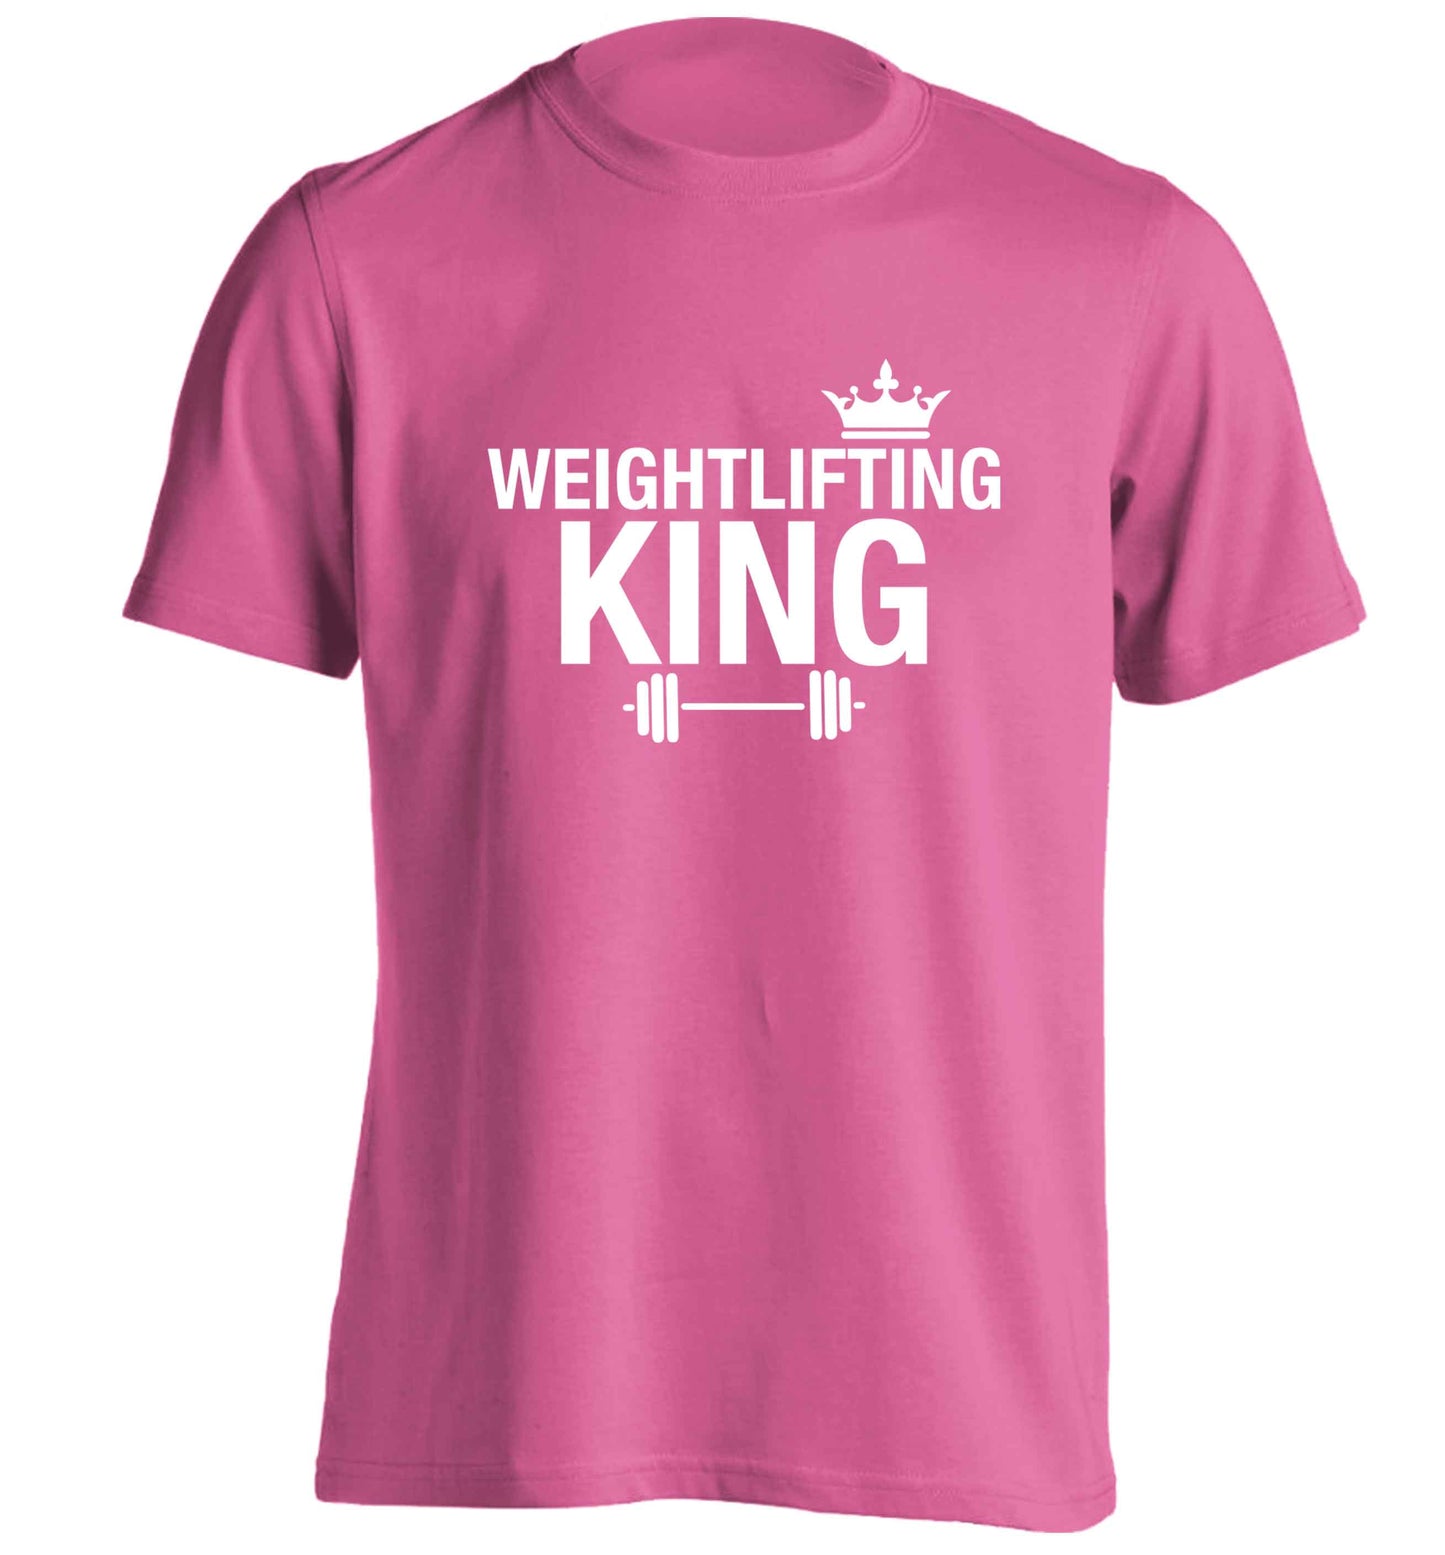 Weightlifting king adults unisex pink Tshirt 2XL